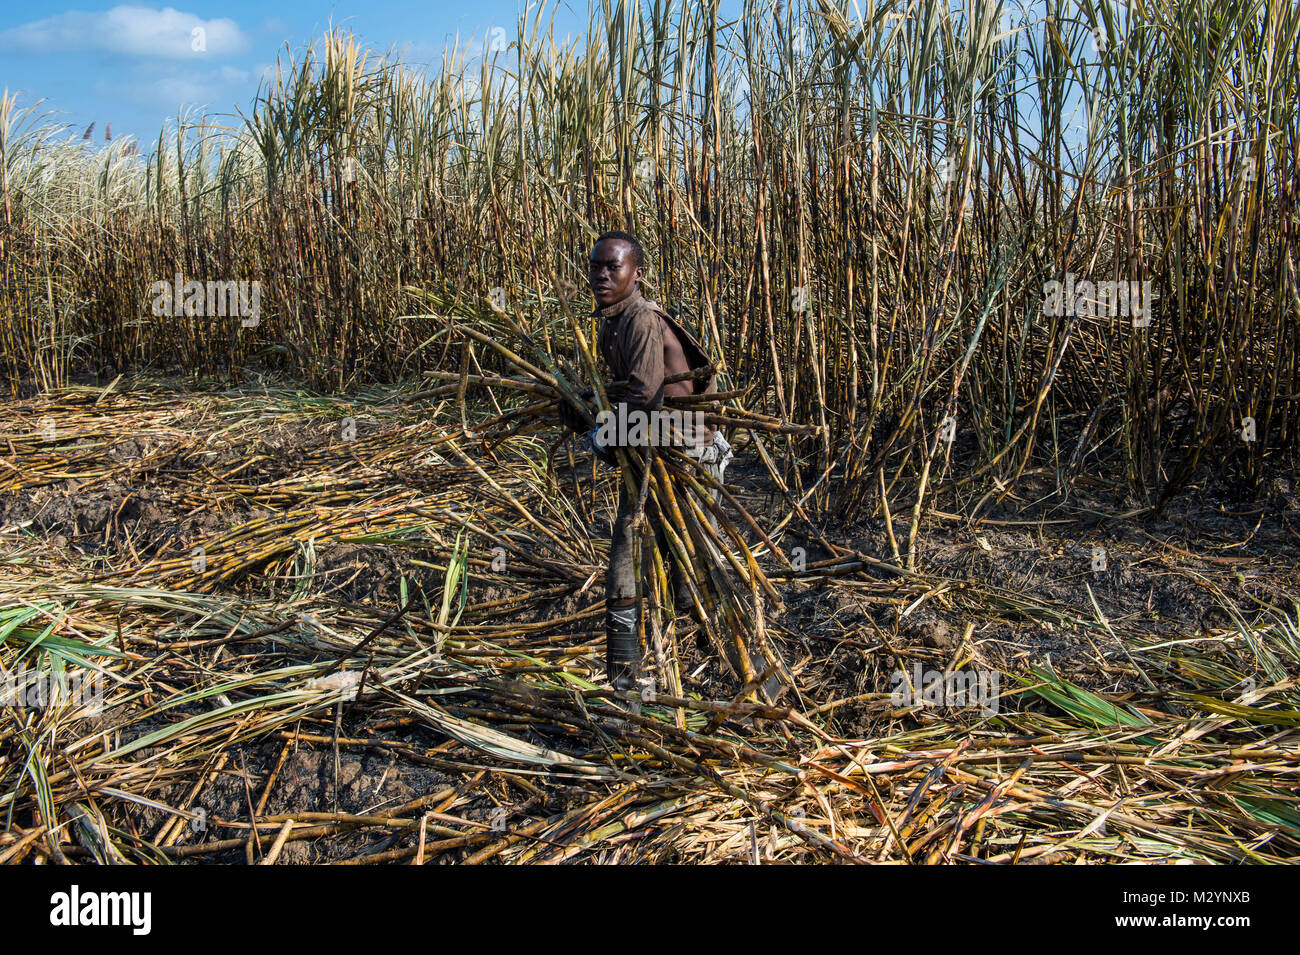 La canna da zucchero lama in bruciato i campi di zucchero di canna, a Nchalo, Malawi, Africa Foto Stock